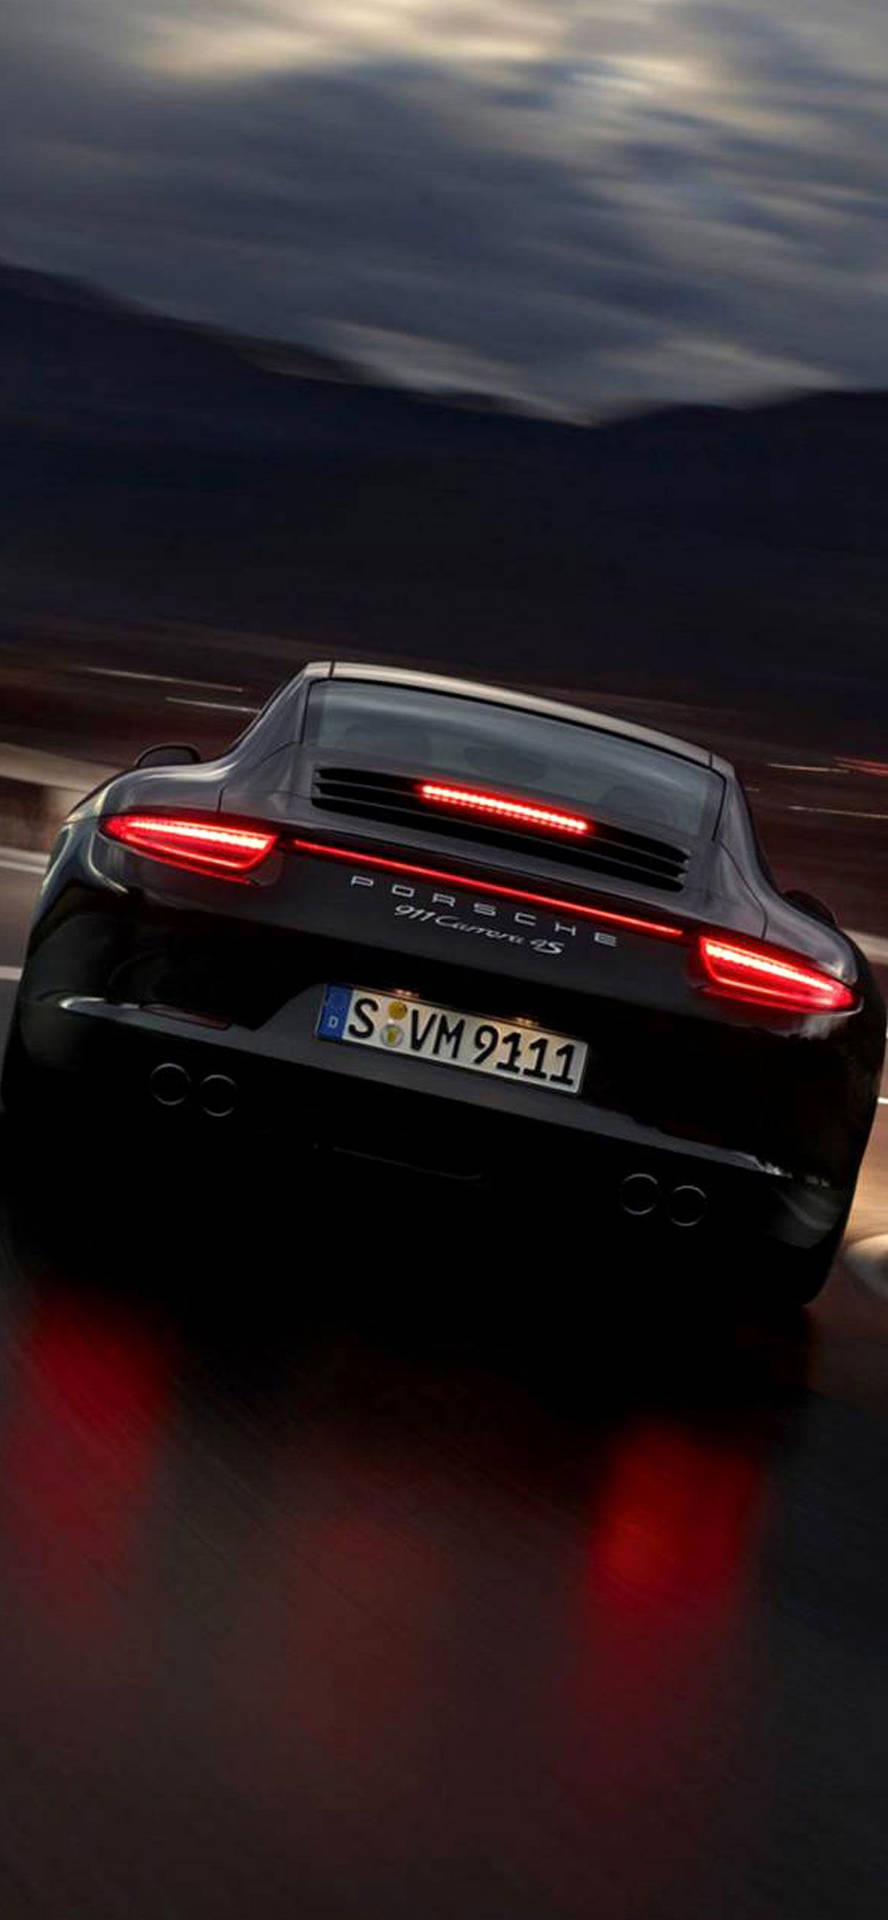 Porsche 911 Glowing Red Rear Light Background